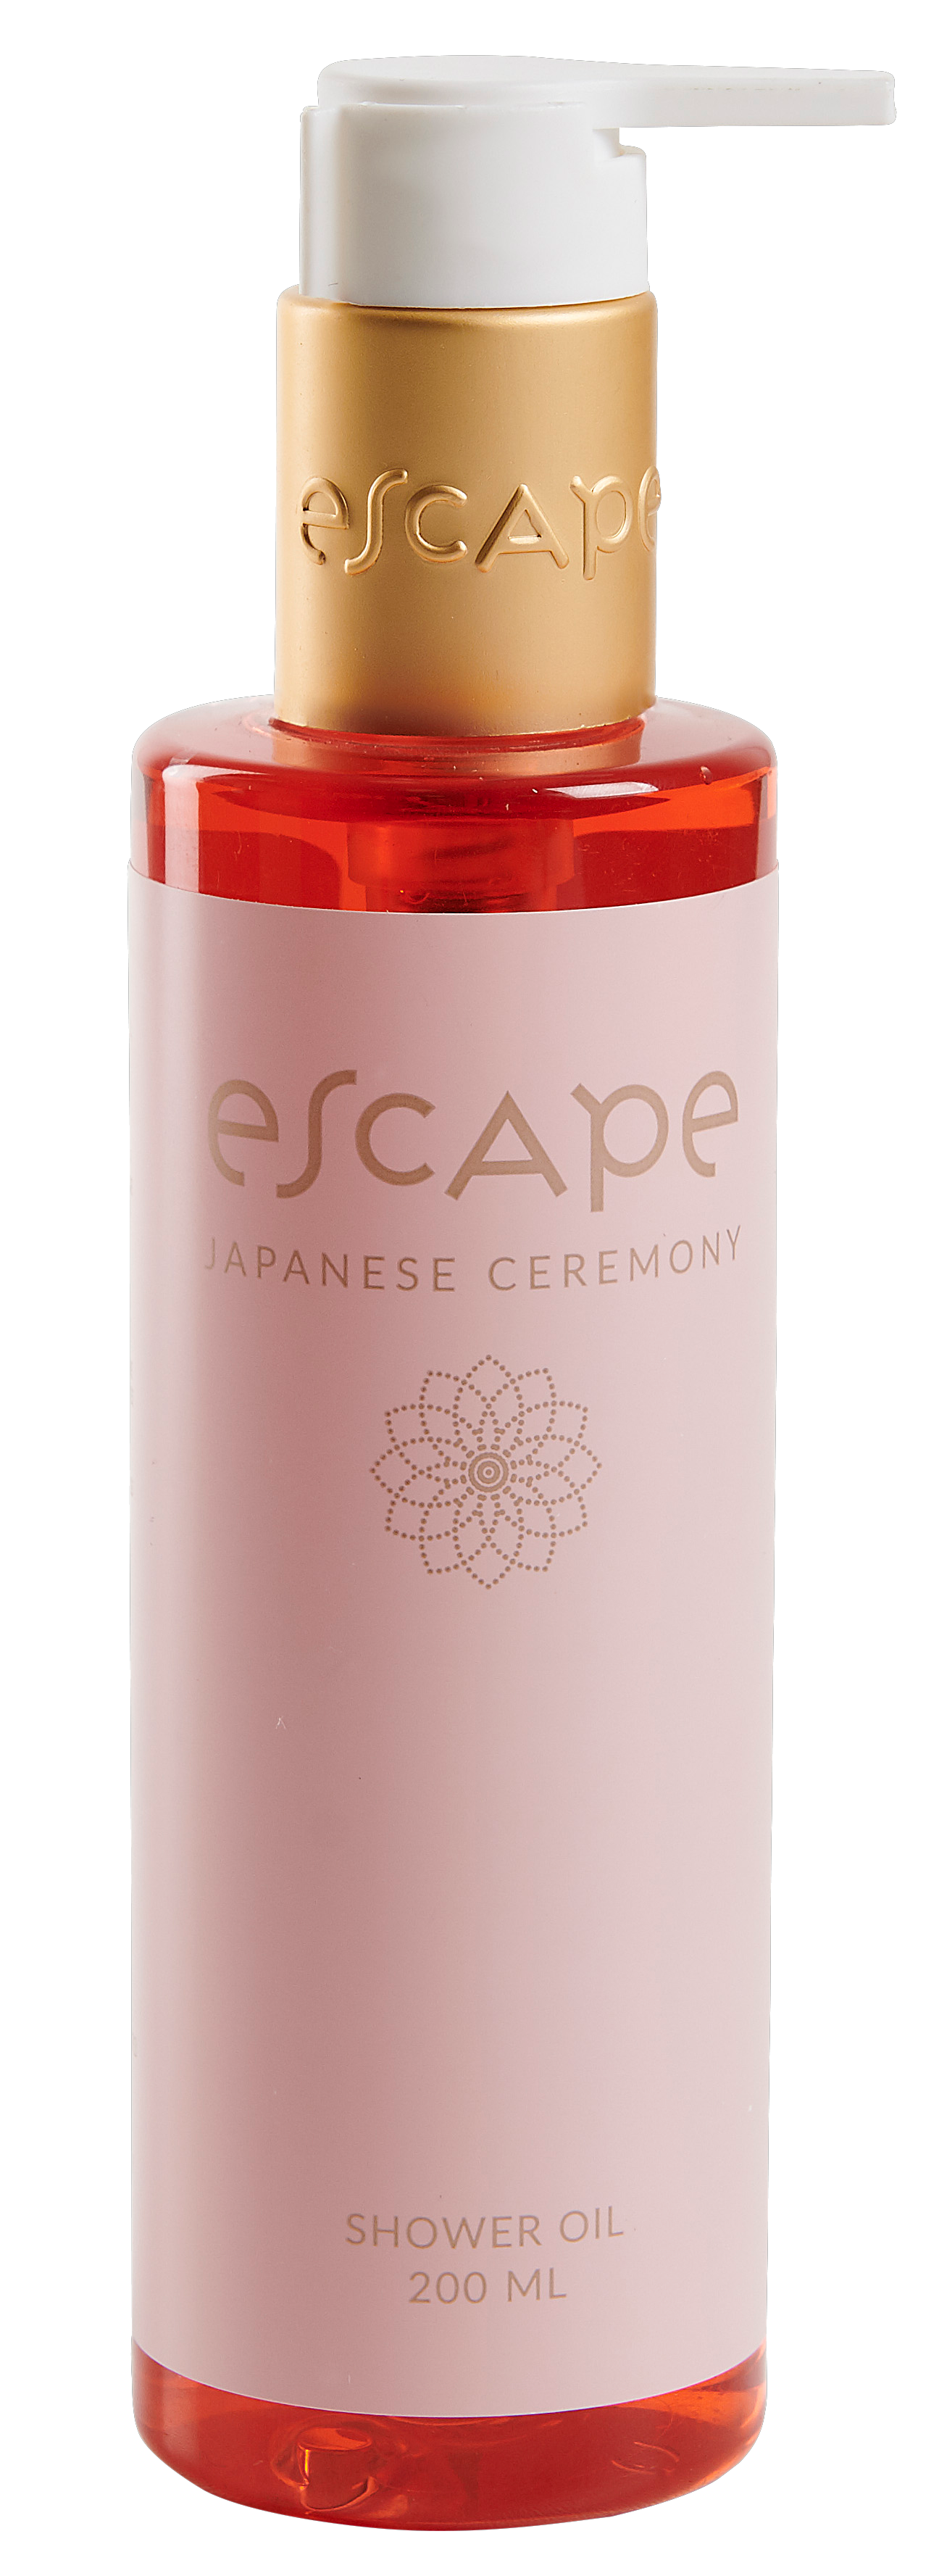  JAPANESE CEREMONY Huile de douche en flacon_japanese-ceremony-huile-de-douche-en-flacon